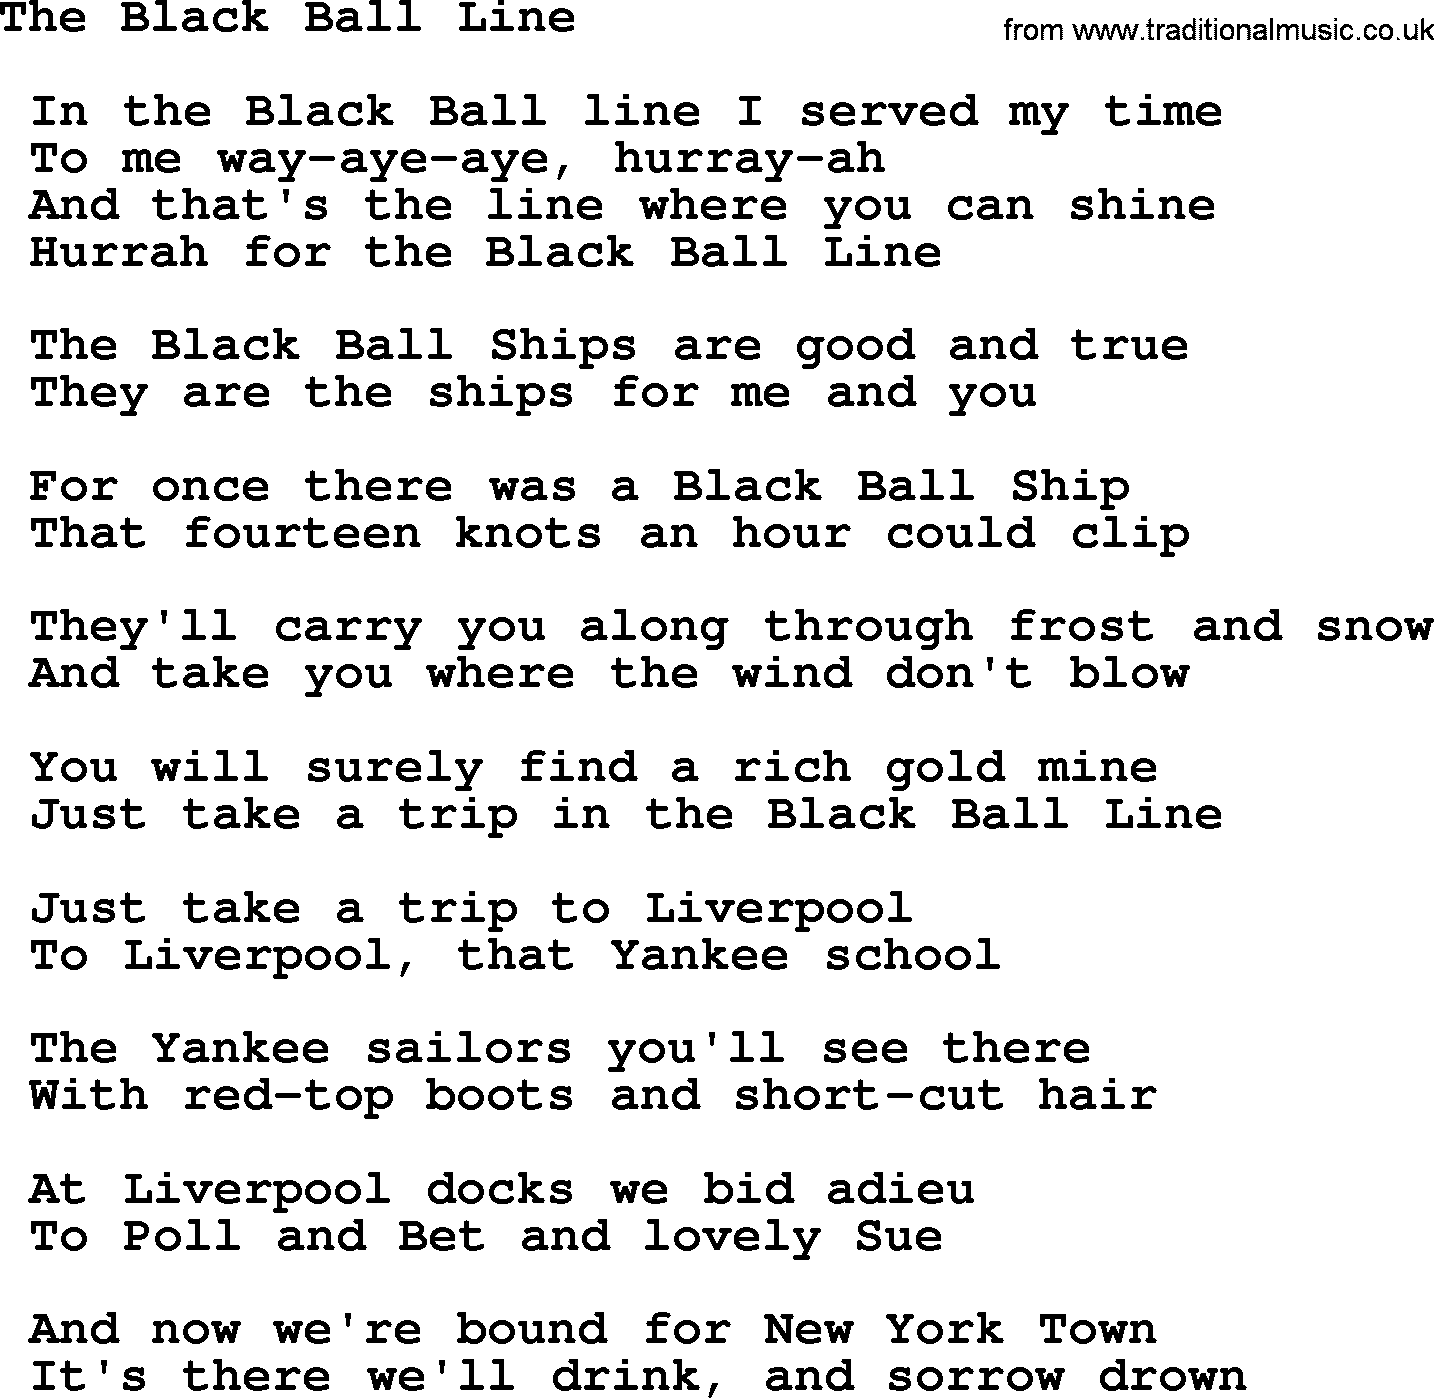 Sea Song or Shantie: The Black Ball Line, lyrics